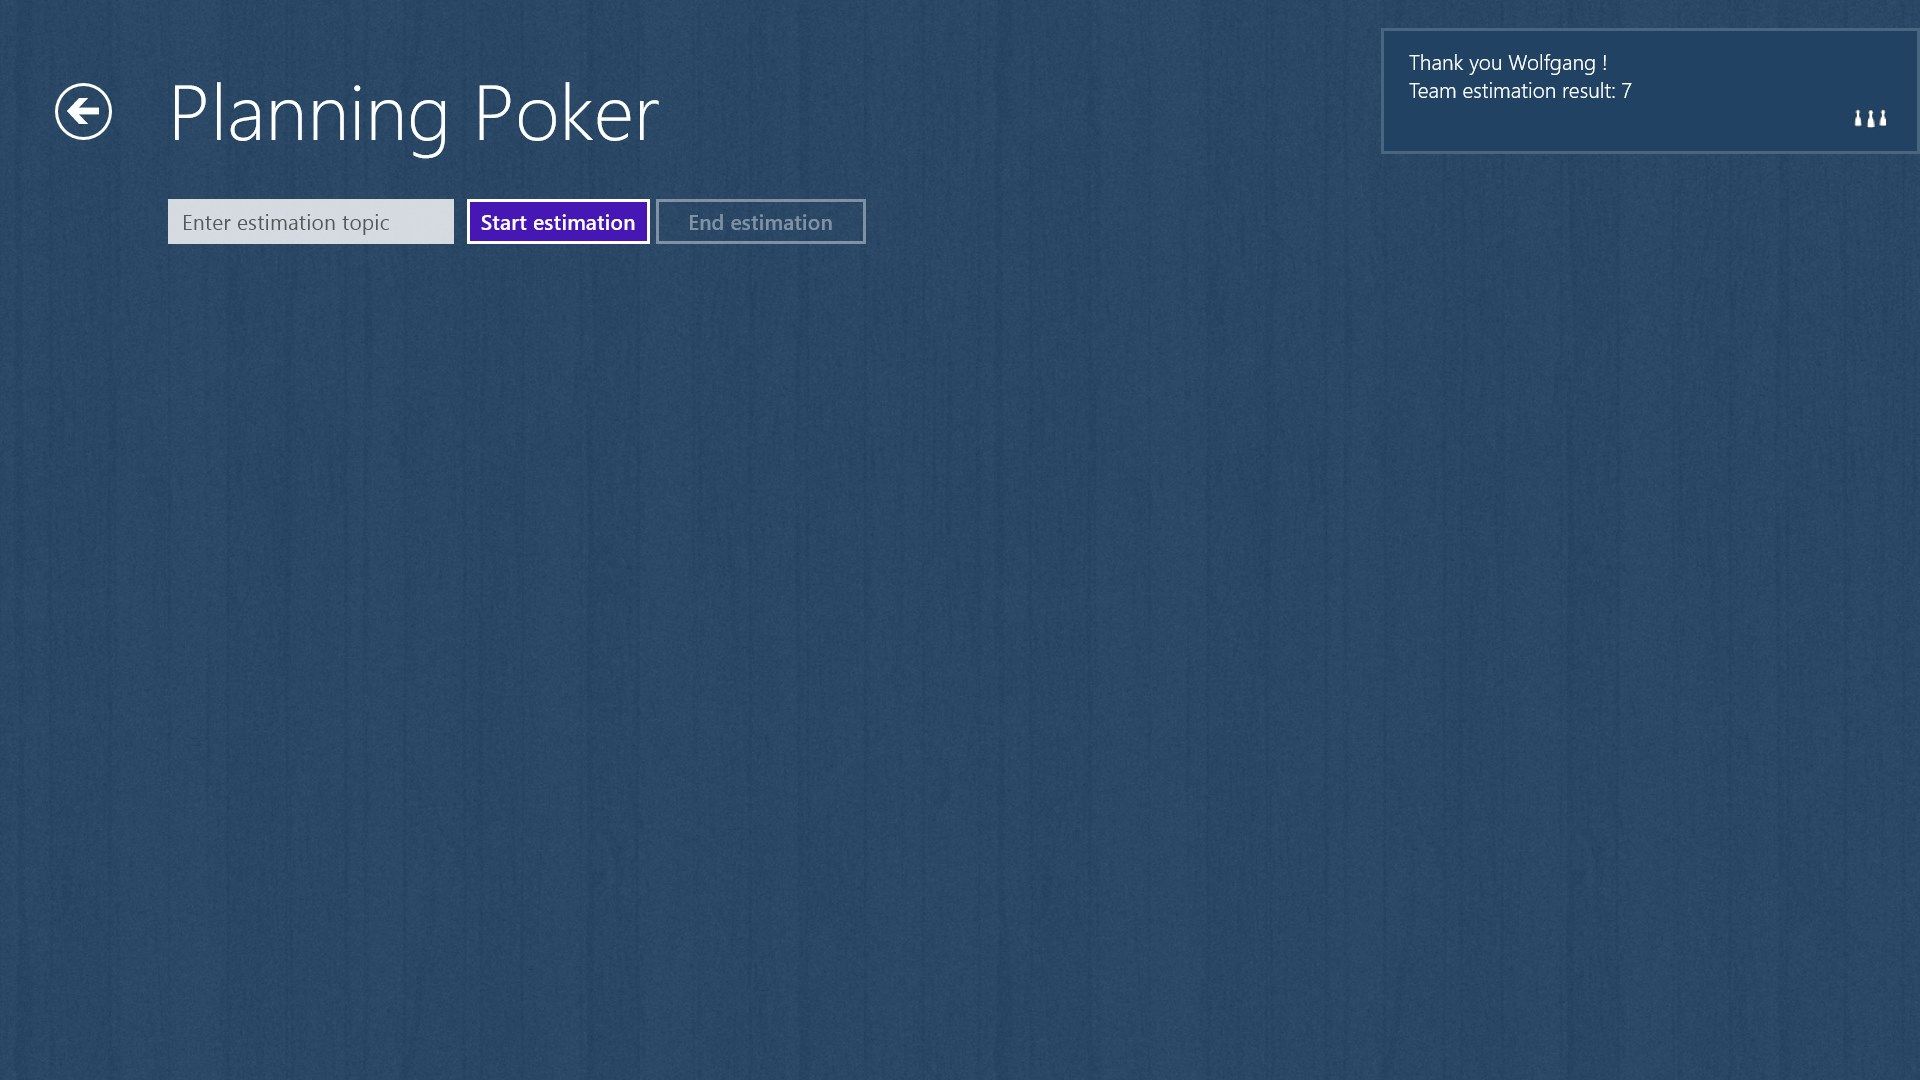 Planning Poker (Estimation completed)